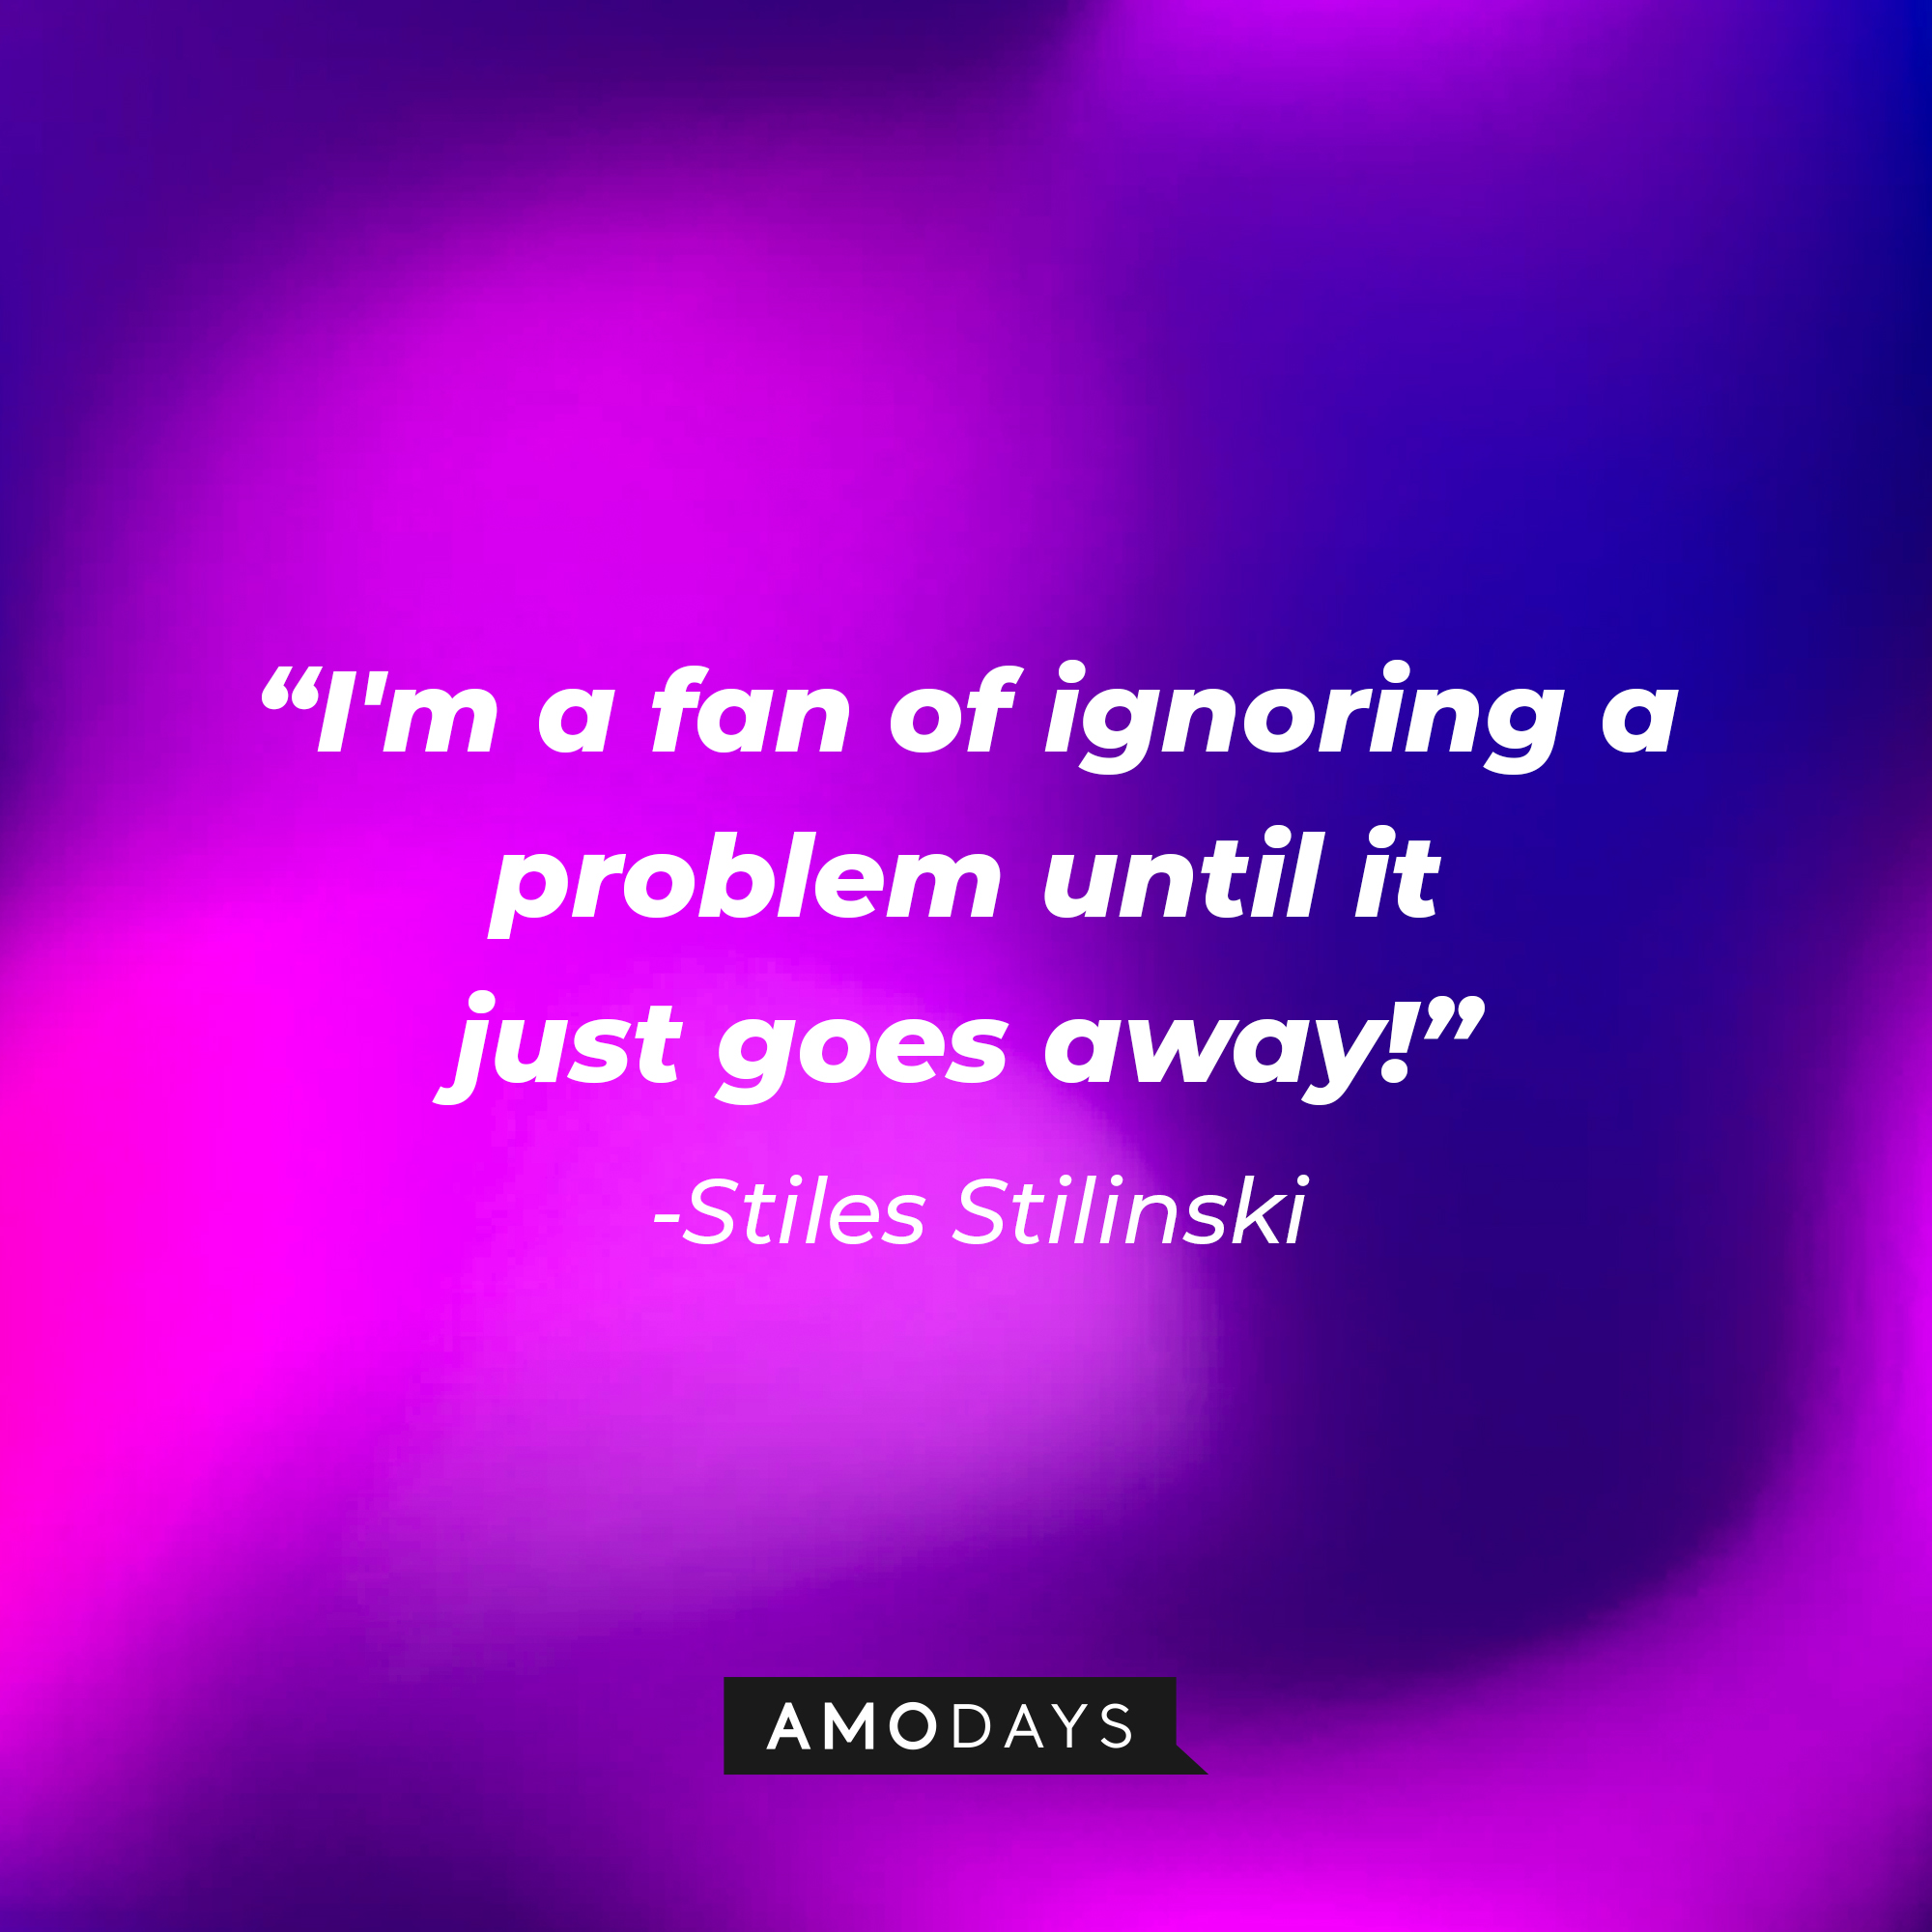 Stiles Stilinski's quote: "I'm a fan of ignoring a problem until it just goes away!" | Image: AmoDays